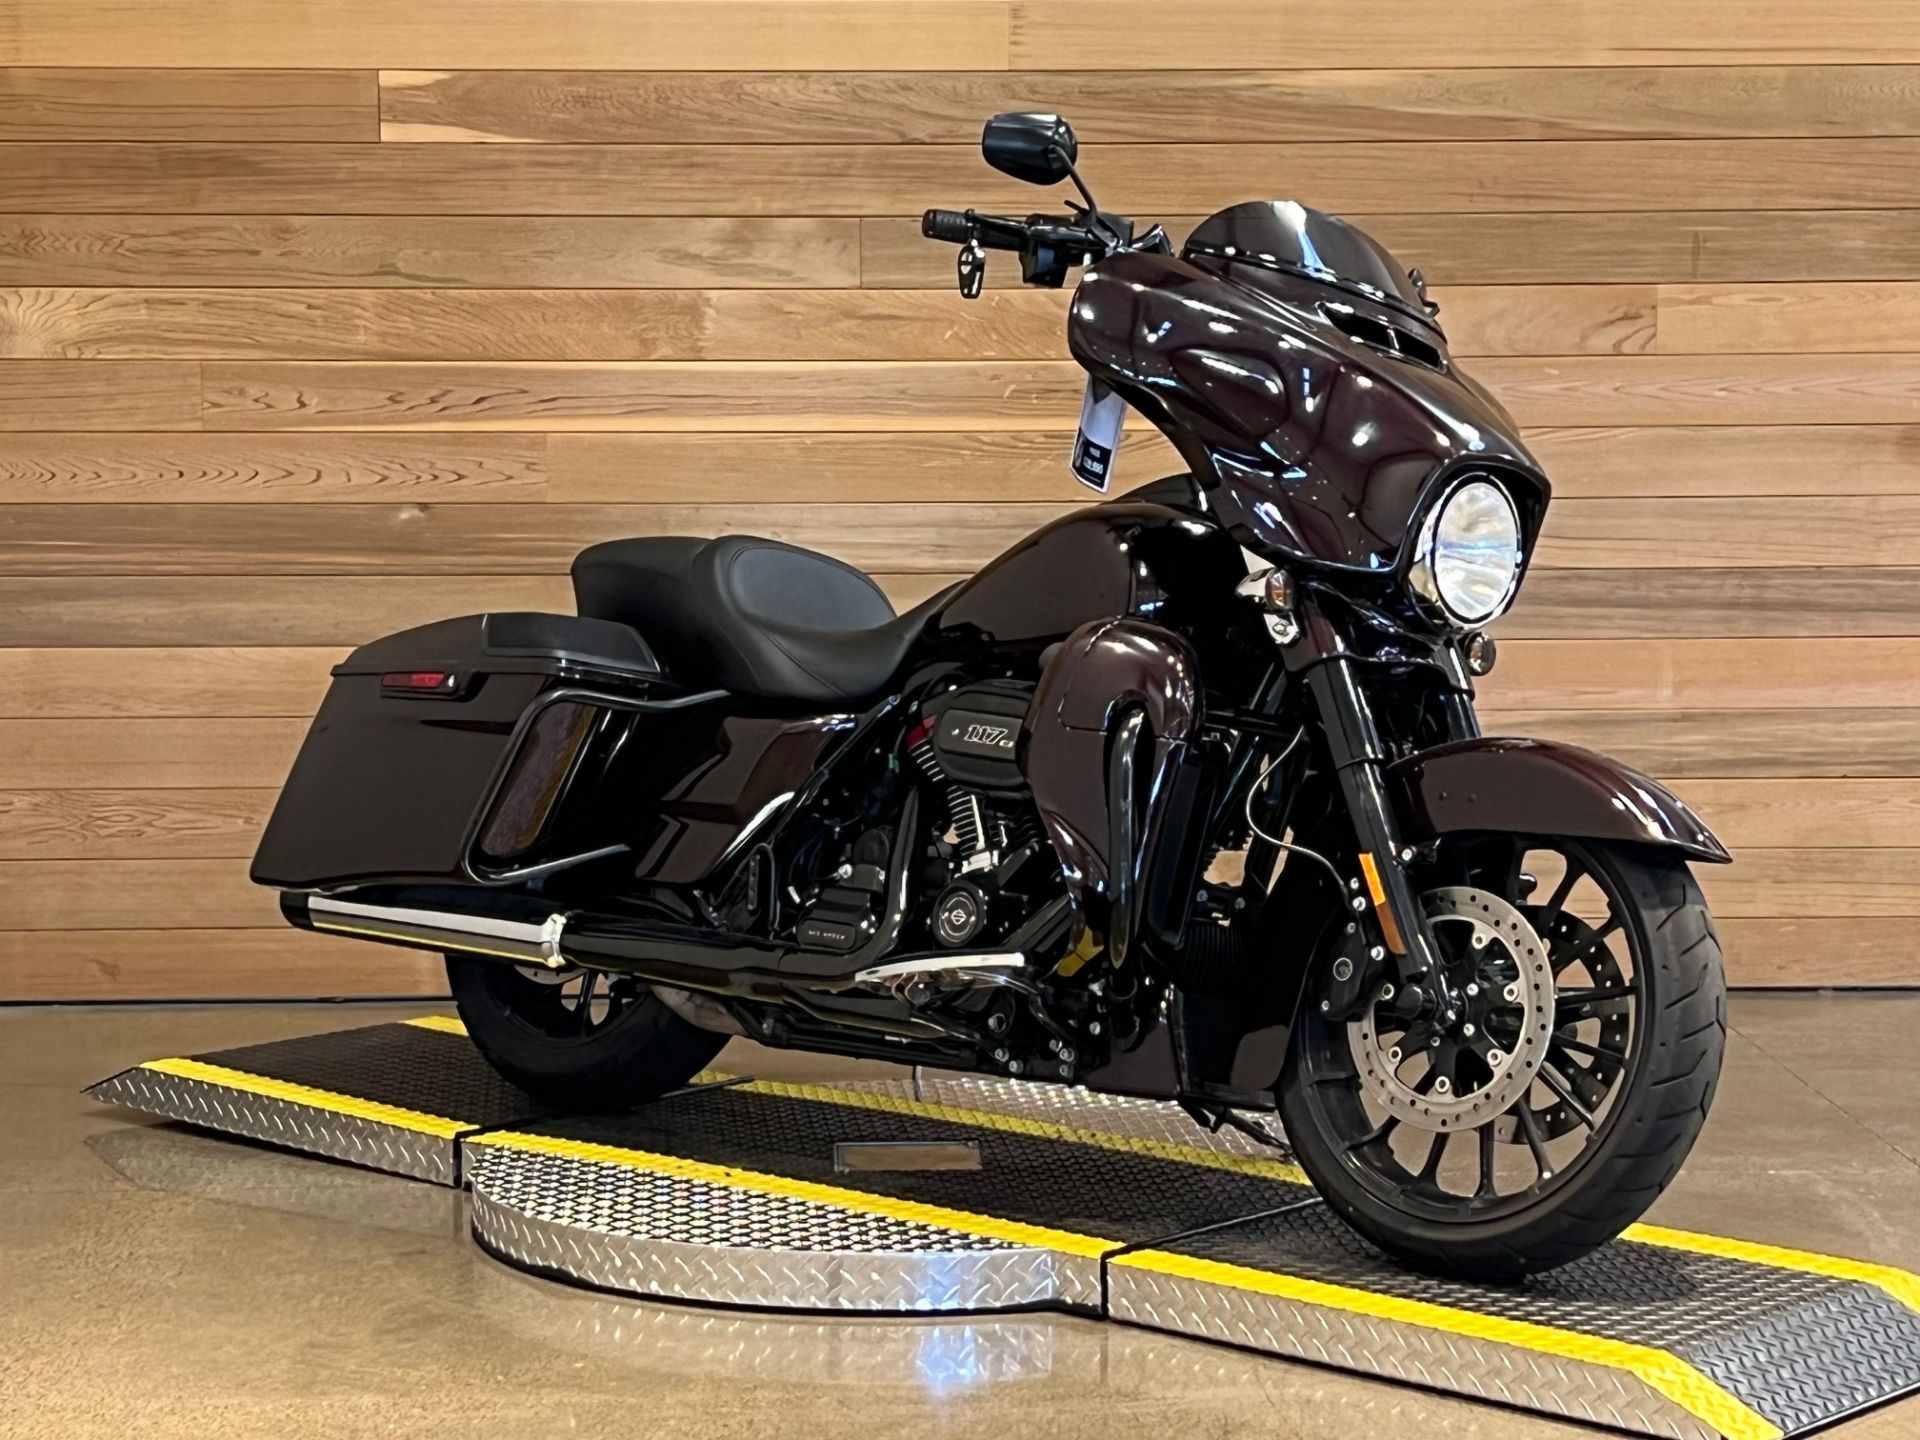 2019 Harley-Davidson CVO™ Street Glide® in Salem, Oregon - Photo 2